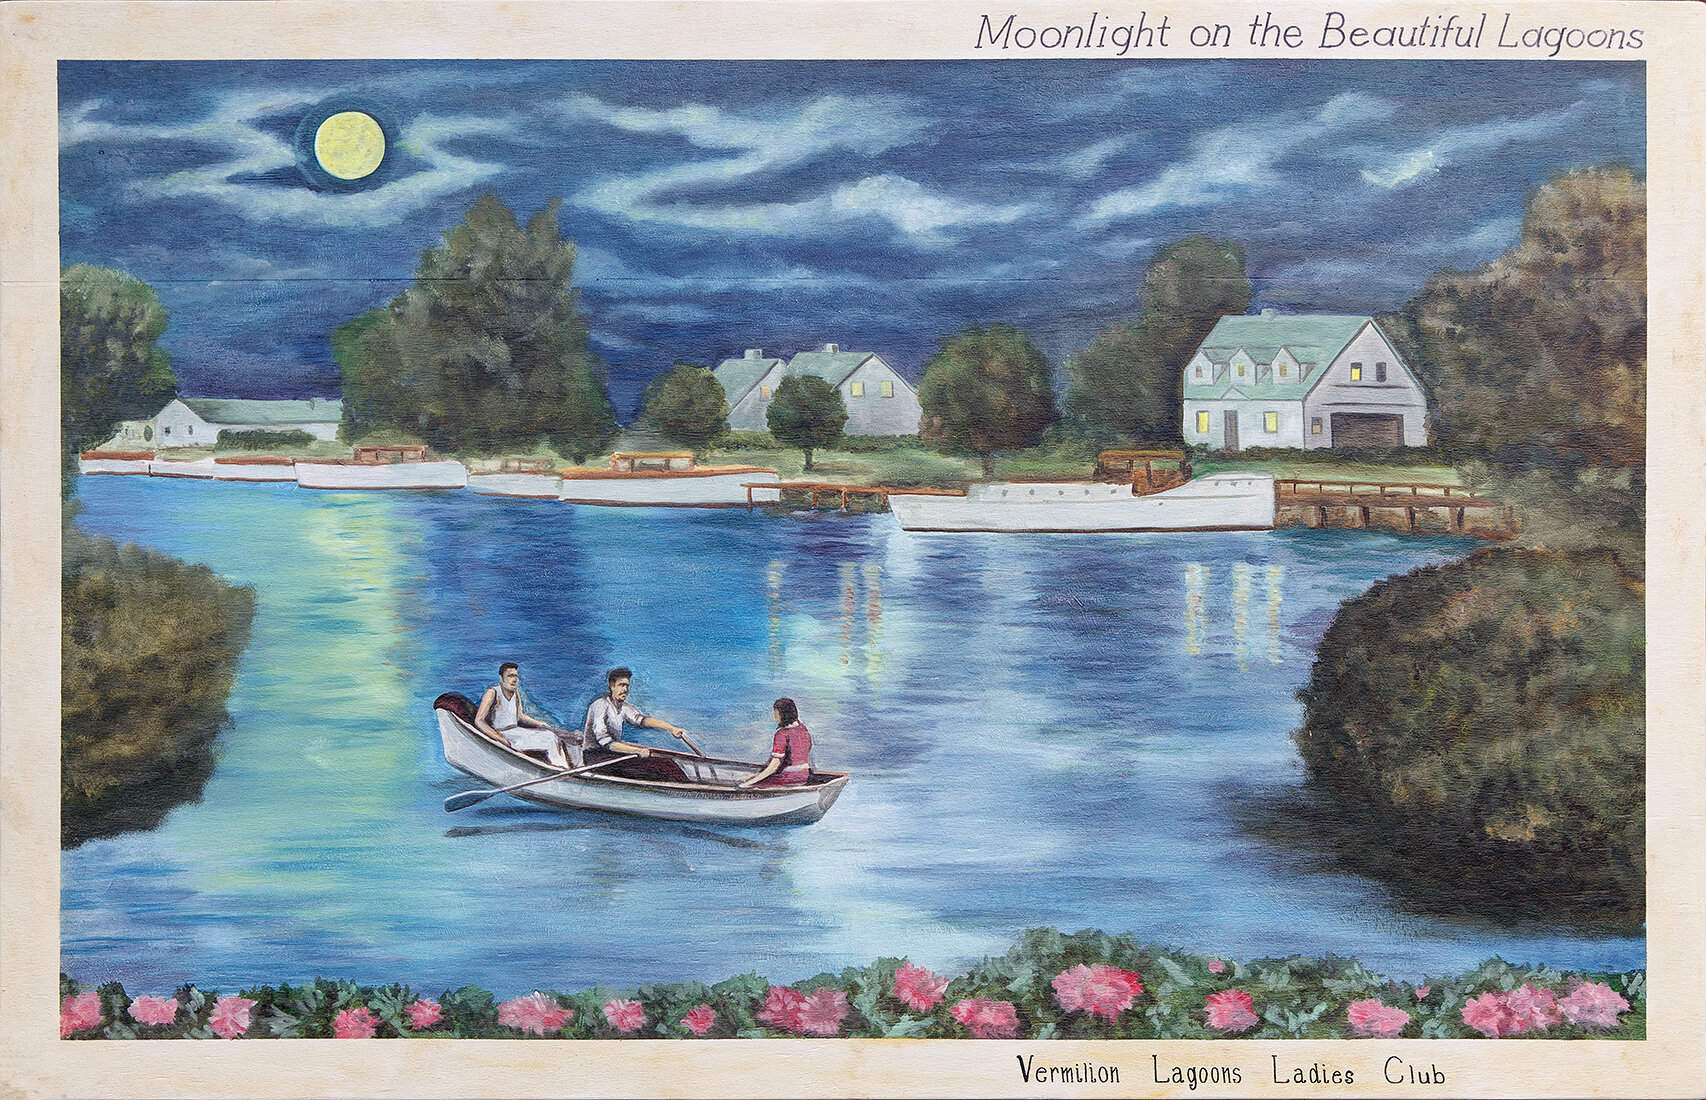 Moonlight on the Beautiful Vermilion Lagoons